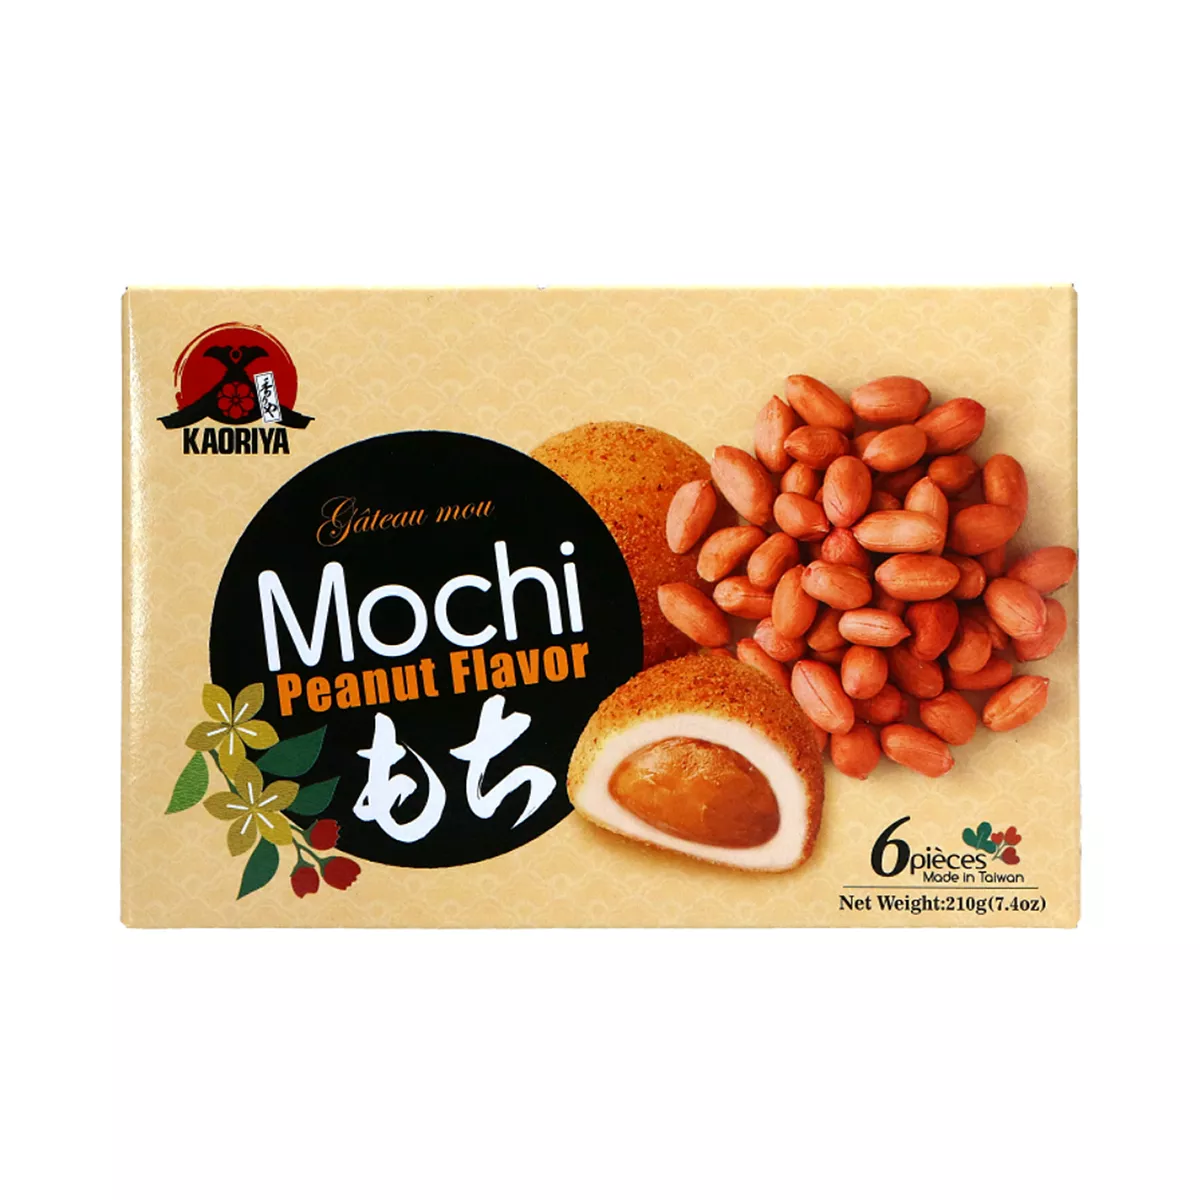 Mochi cu arahide KAORIYA 210g, [],asianfood.ro